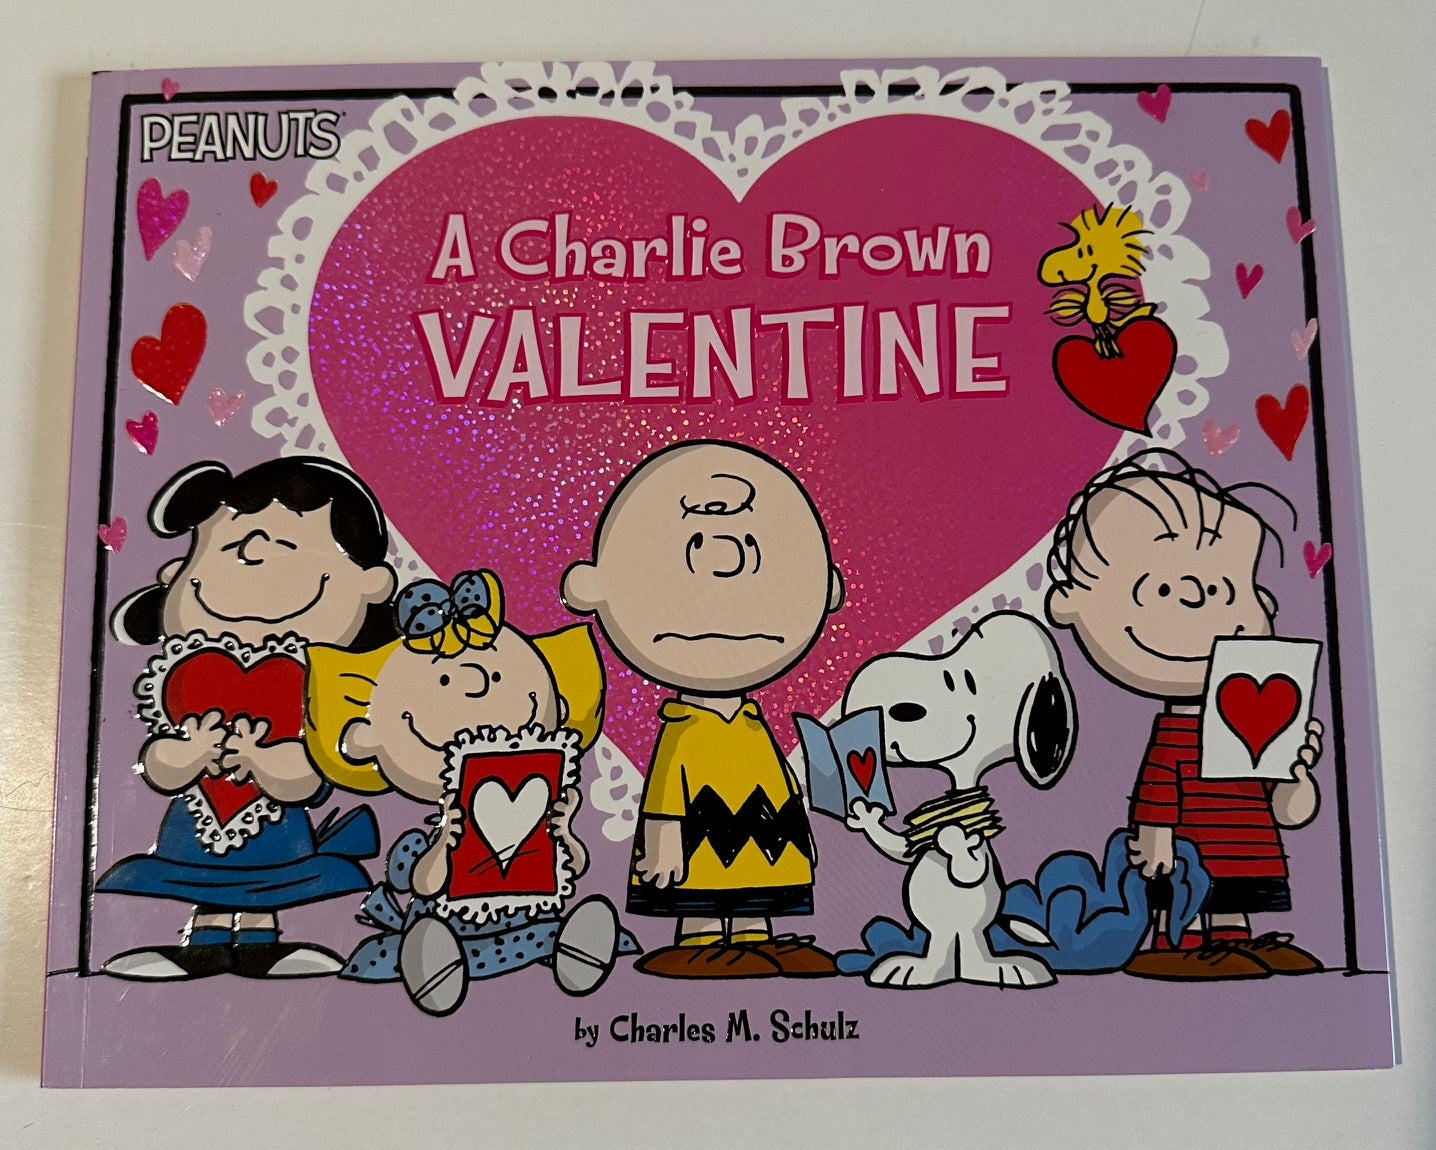 "A Charlie Brown Valentine"